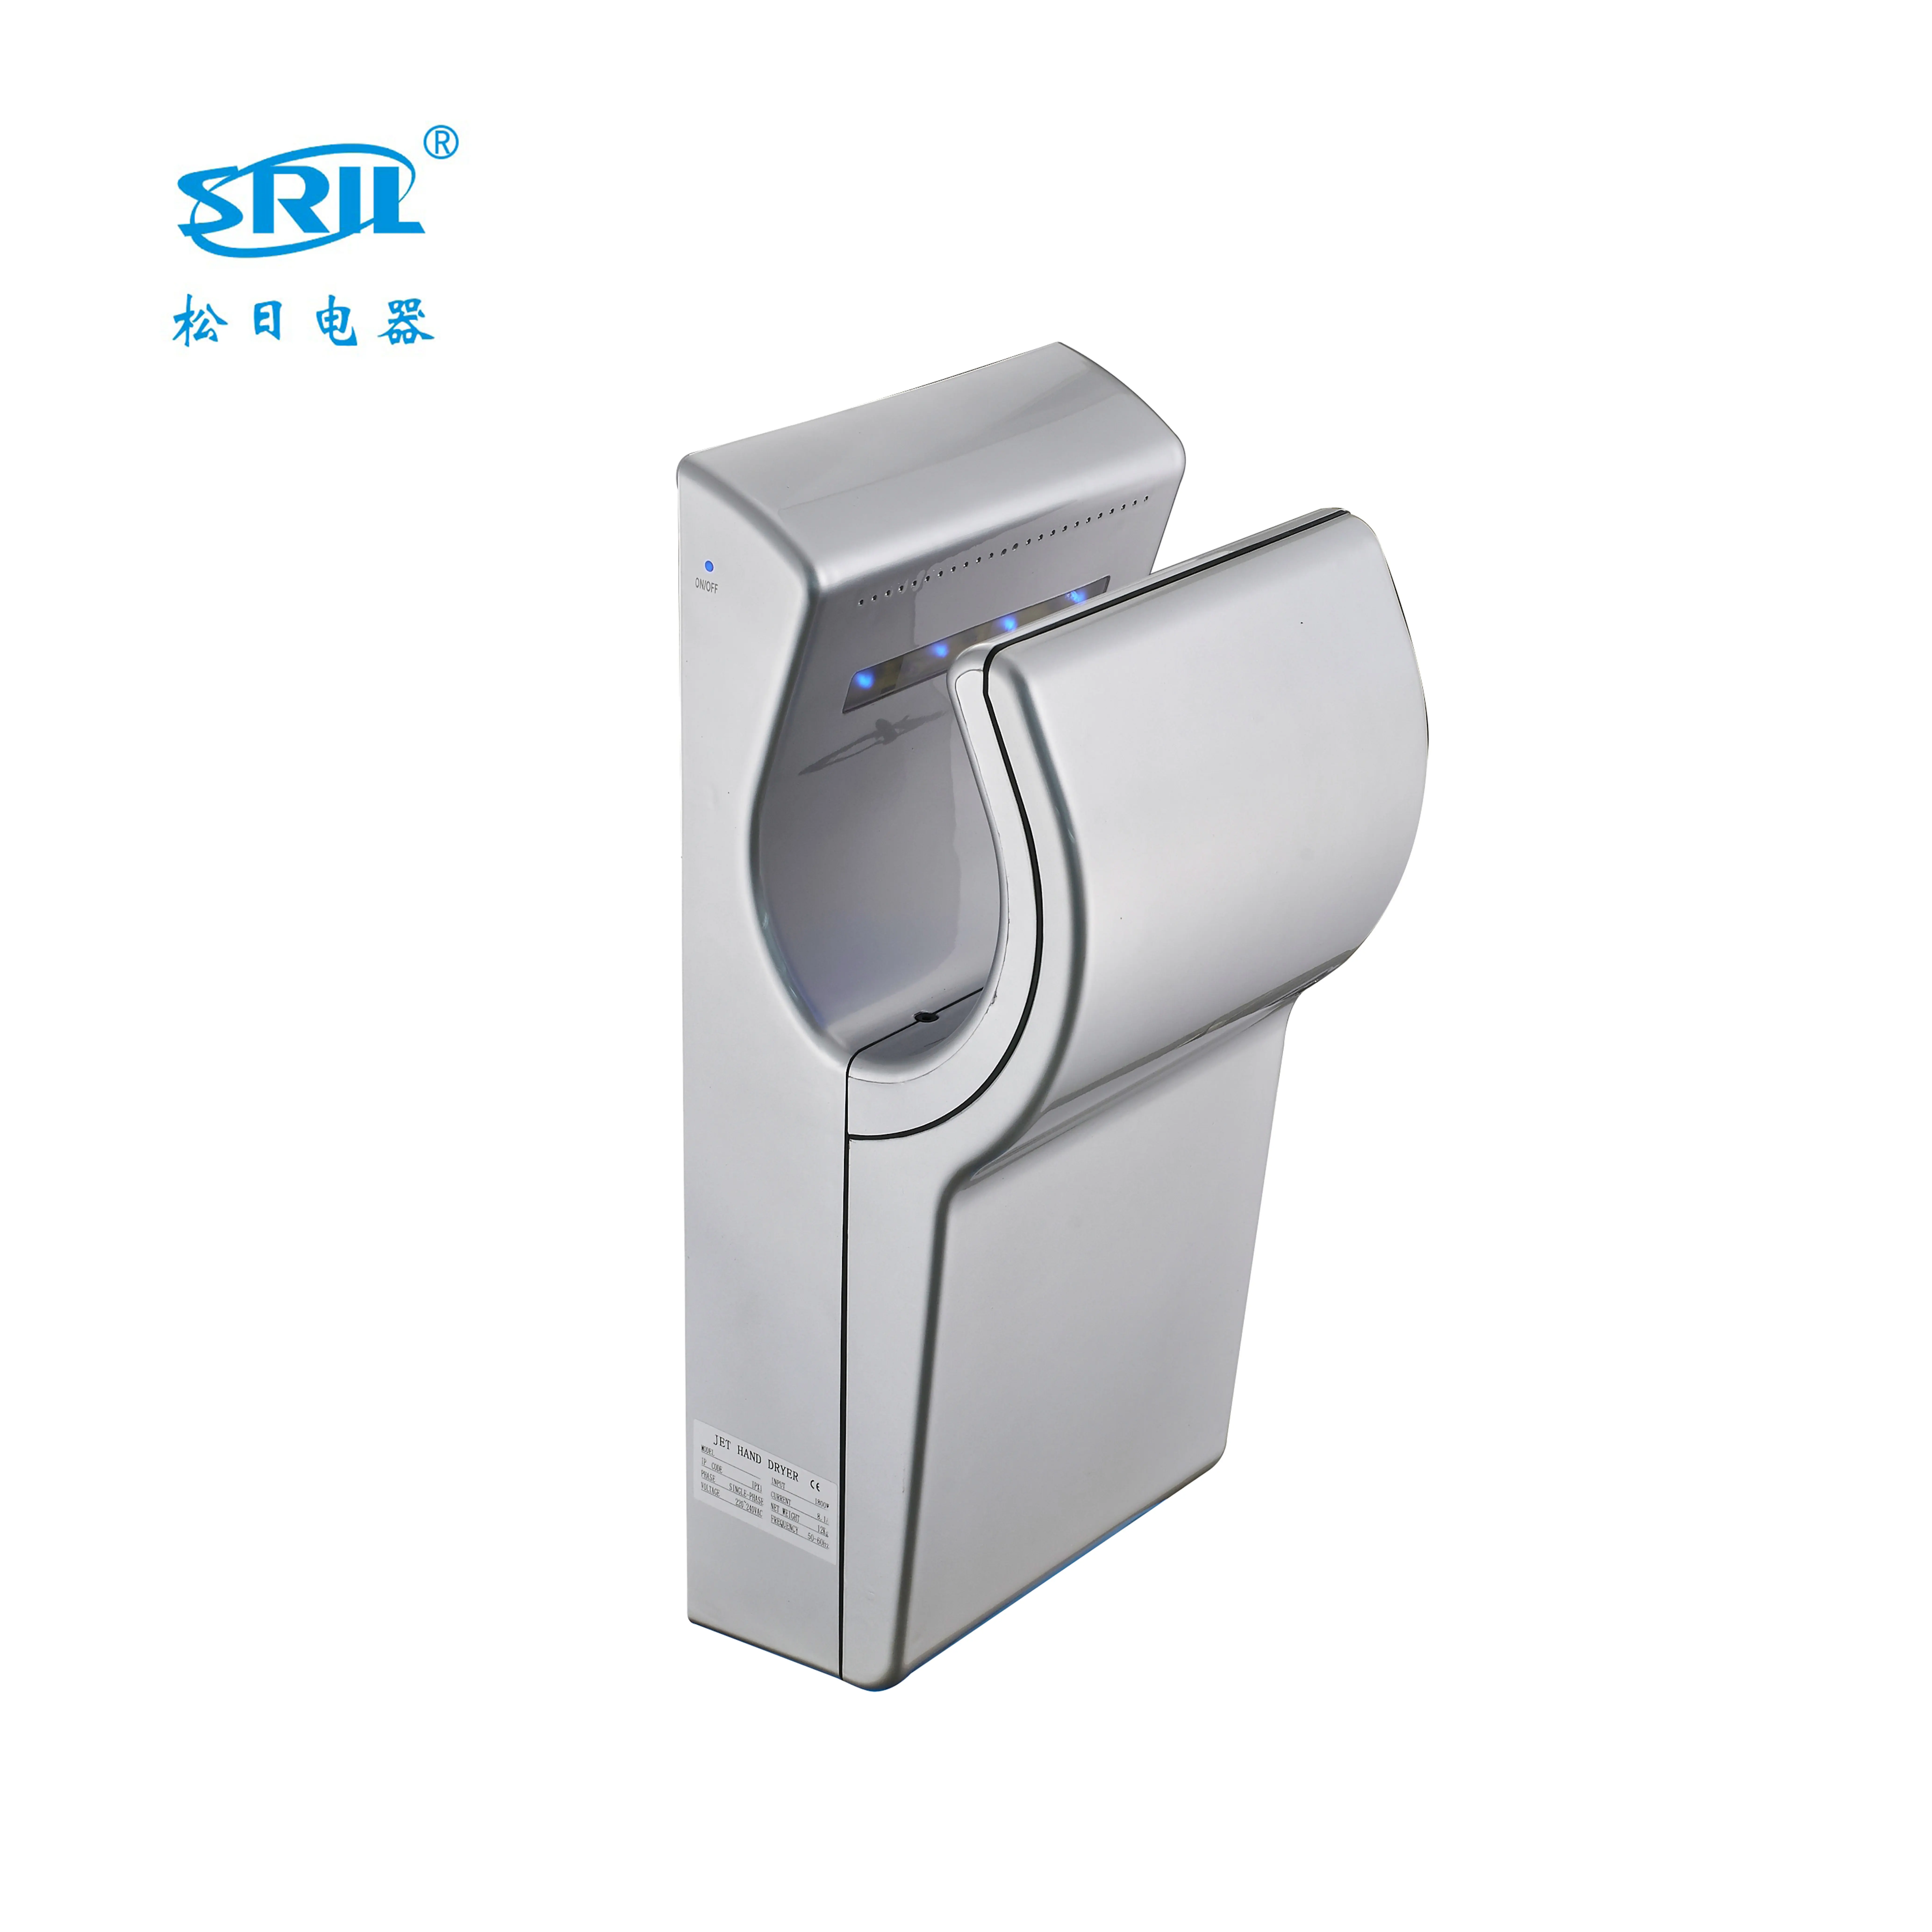 HEPA Filter sensor hand dryer ABS Plastic deluxe automatic jet Hand Dryer for hotel bathroom public school use